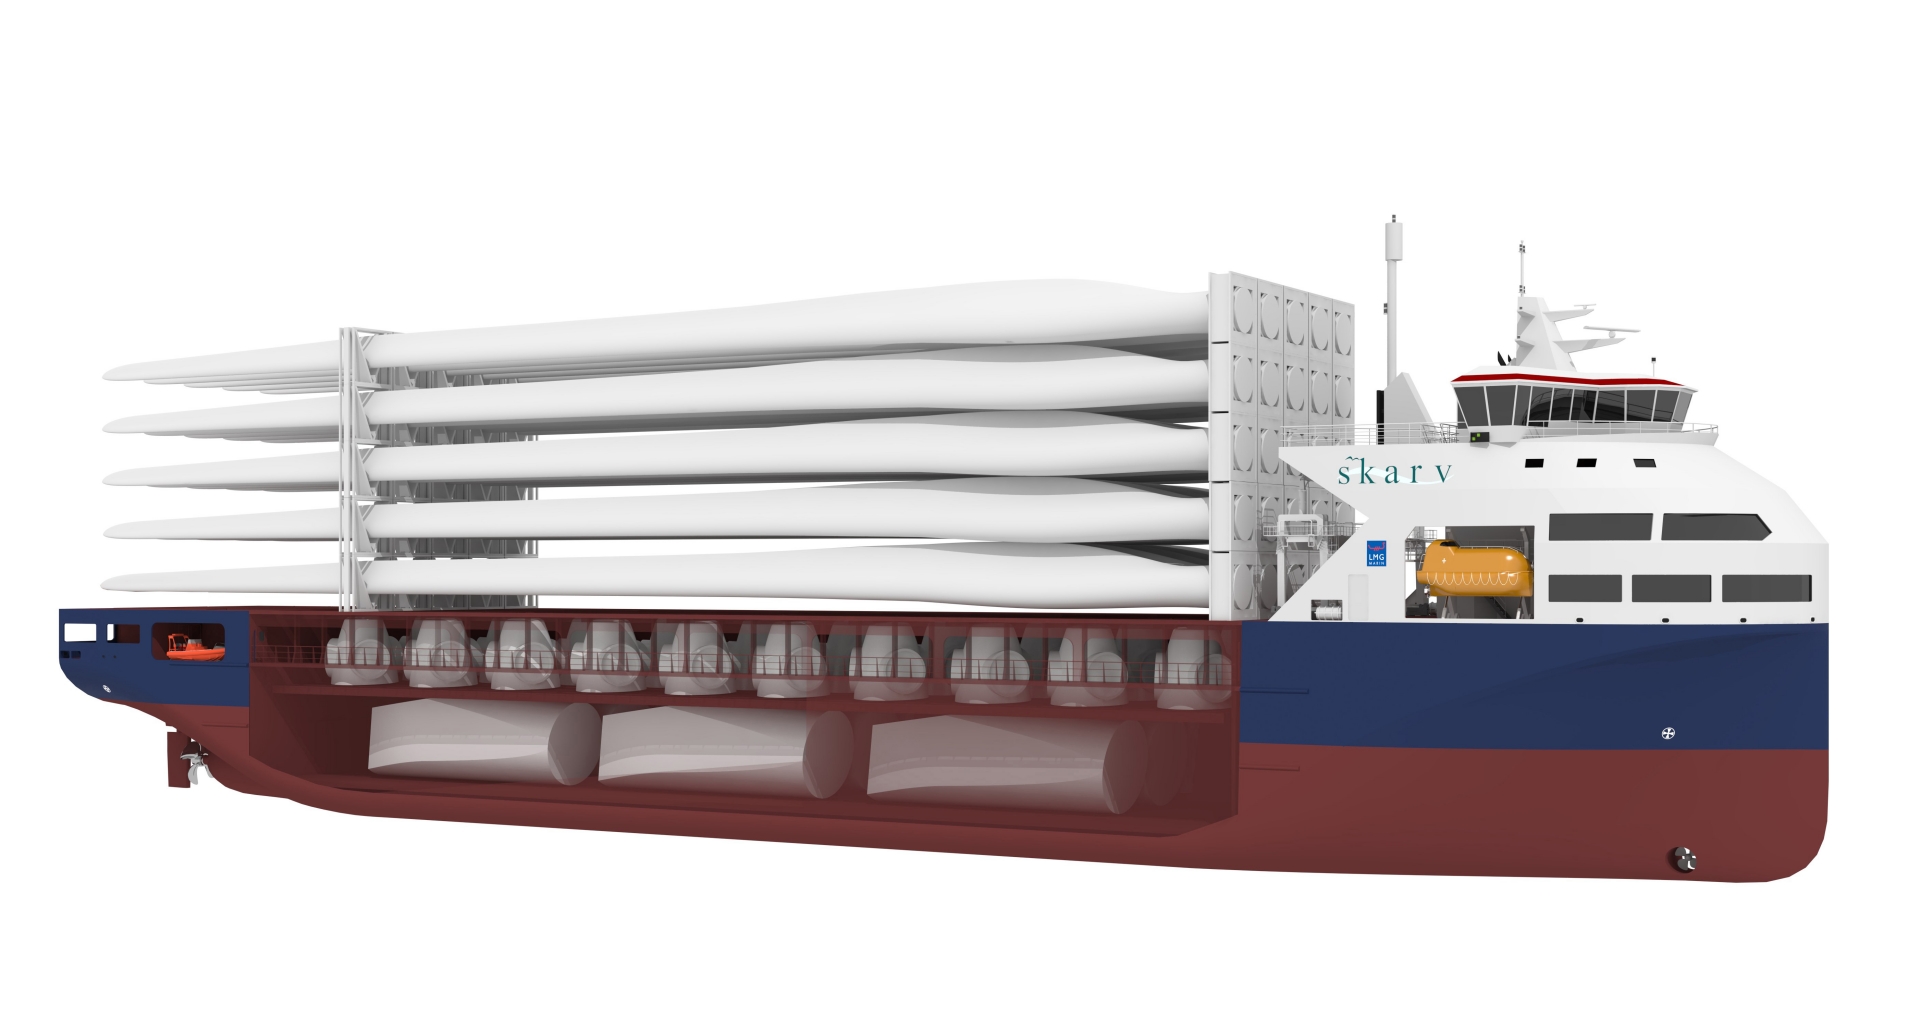 Skarv orders up to eight shortsea MPP vessels